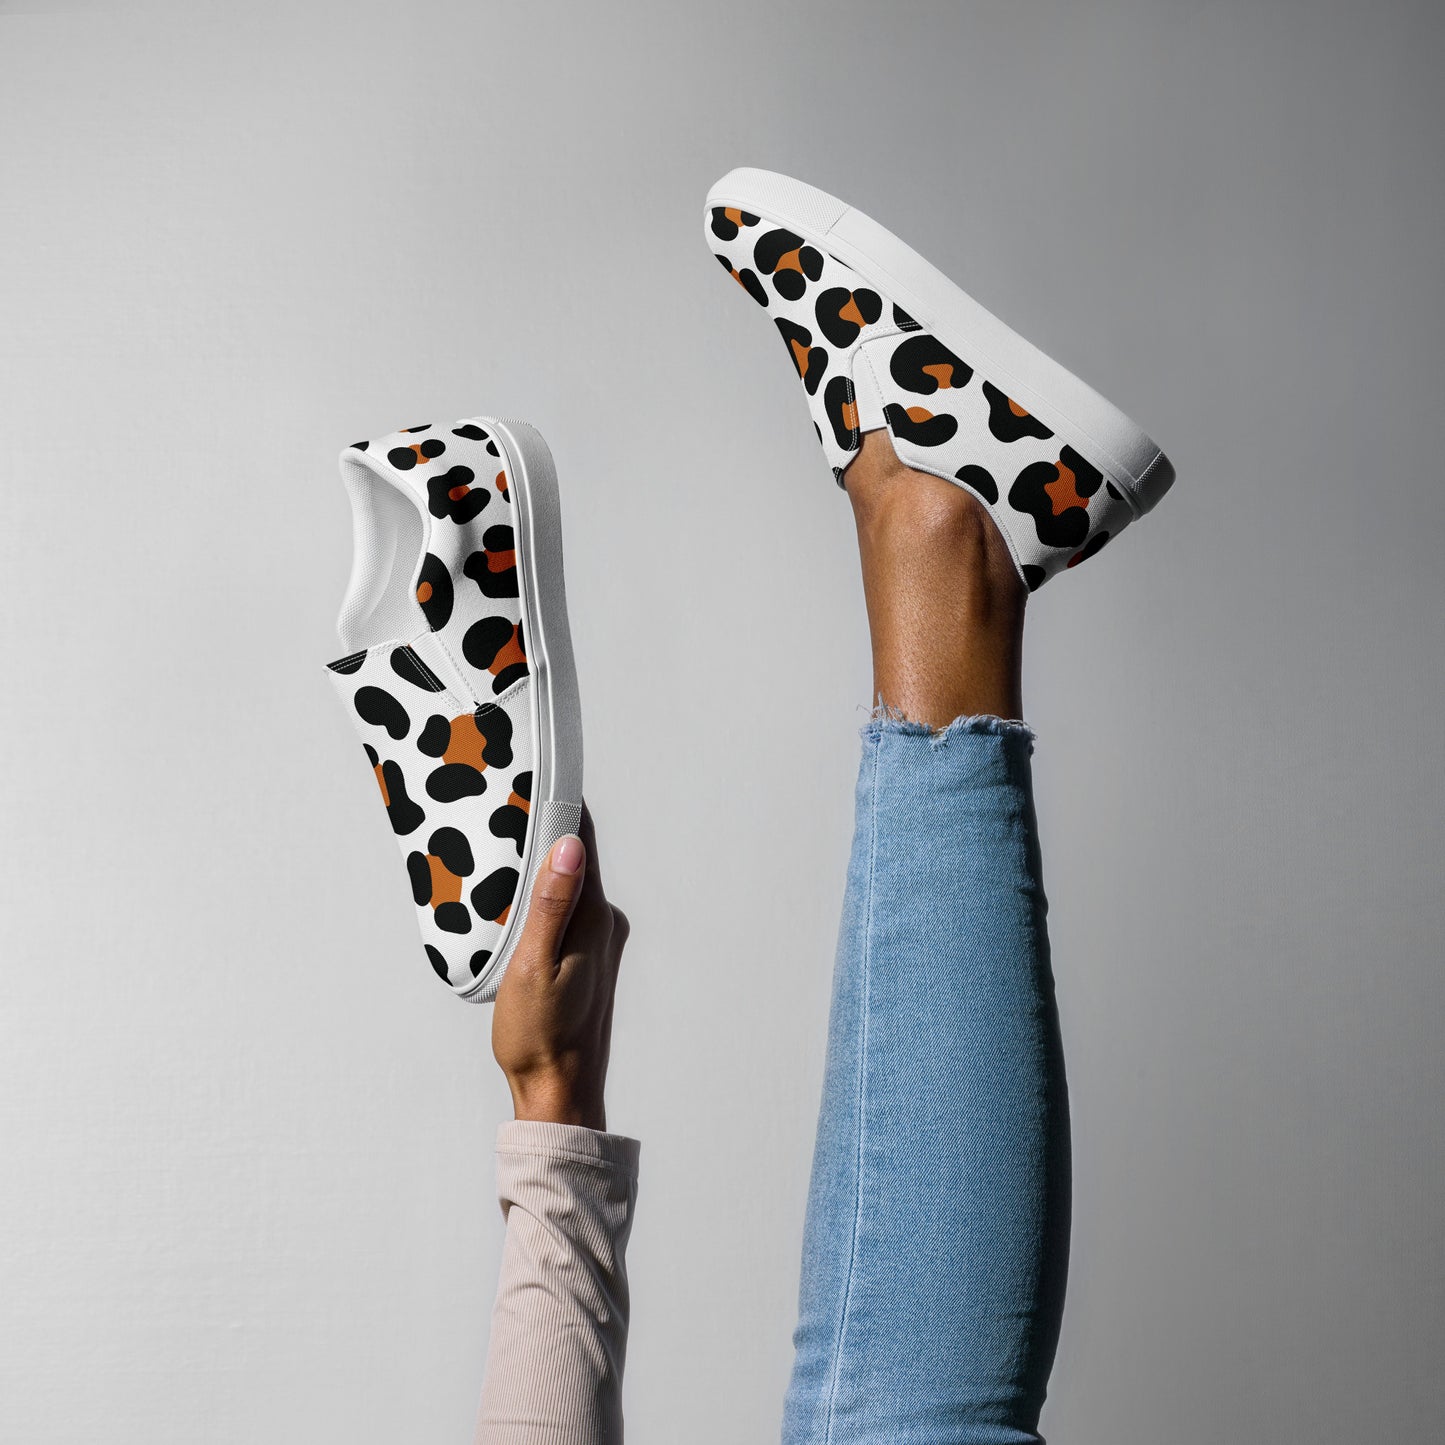 Women’s Slip-on Canvas Shoes